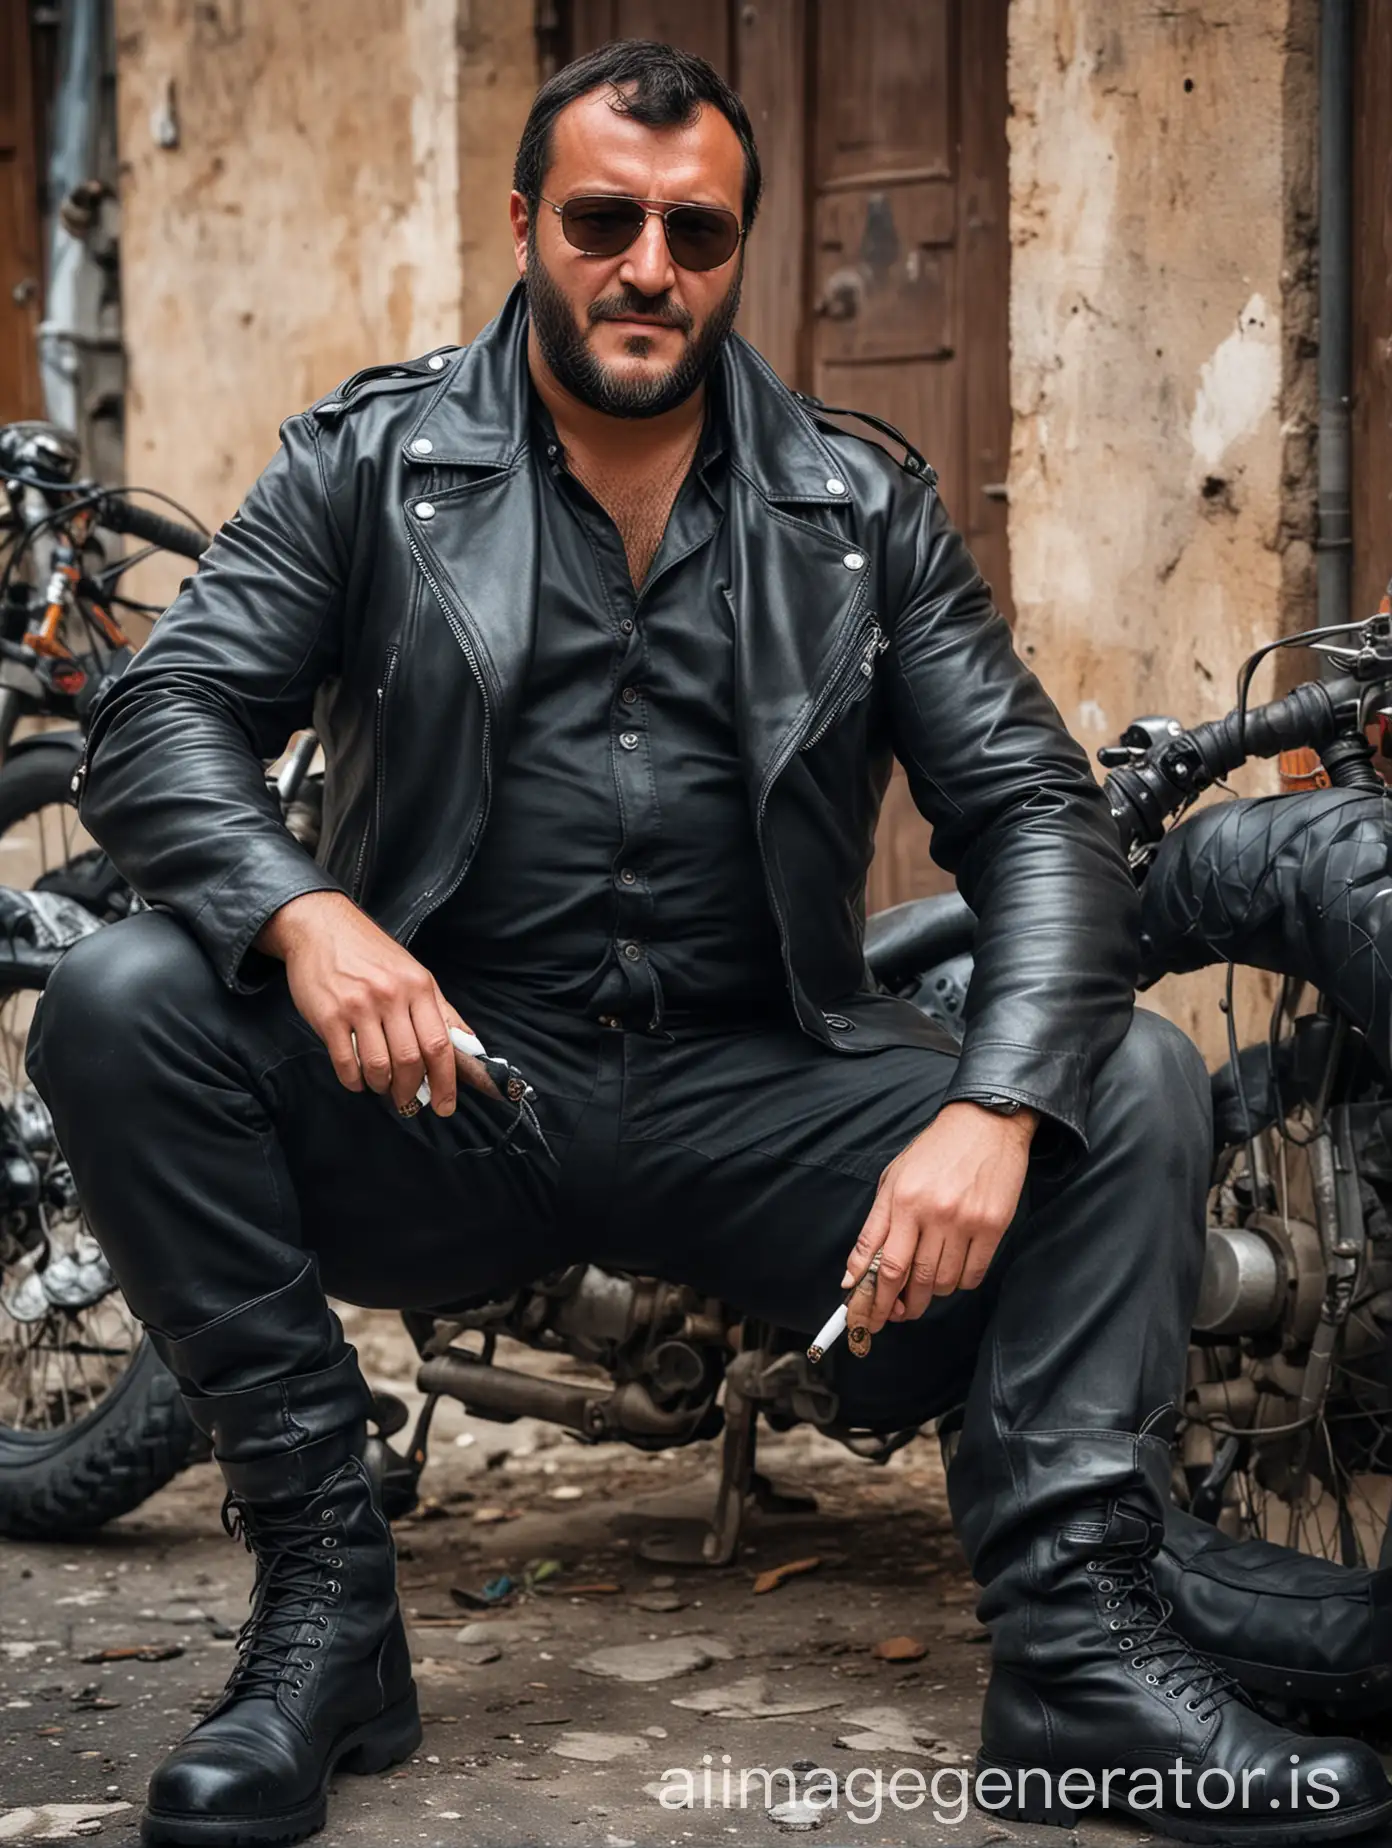 Ruggedly-Handsome-Matteo-Salvini-Biker-Portrait-in-Black-Leather-with-Cigar